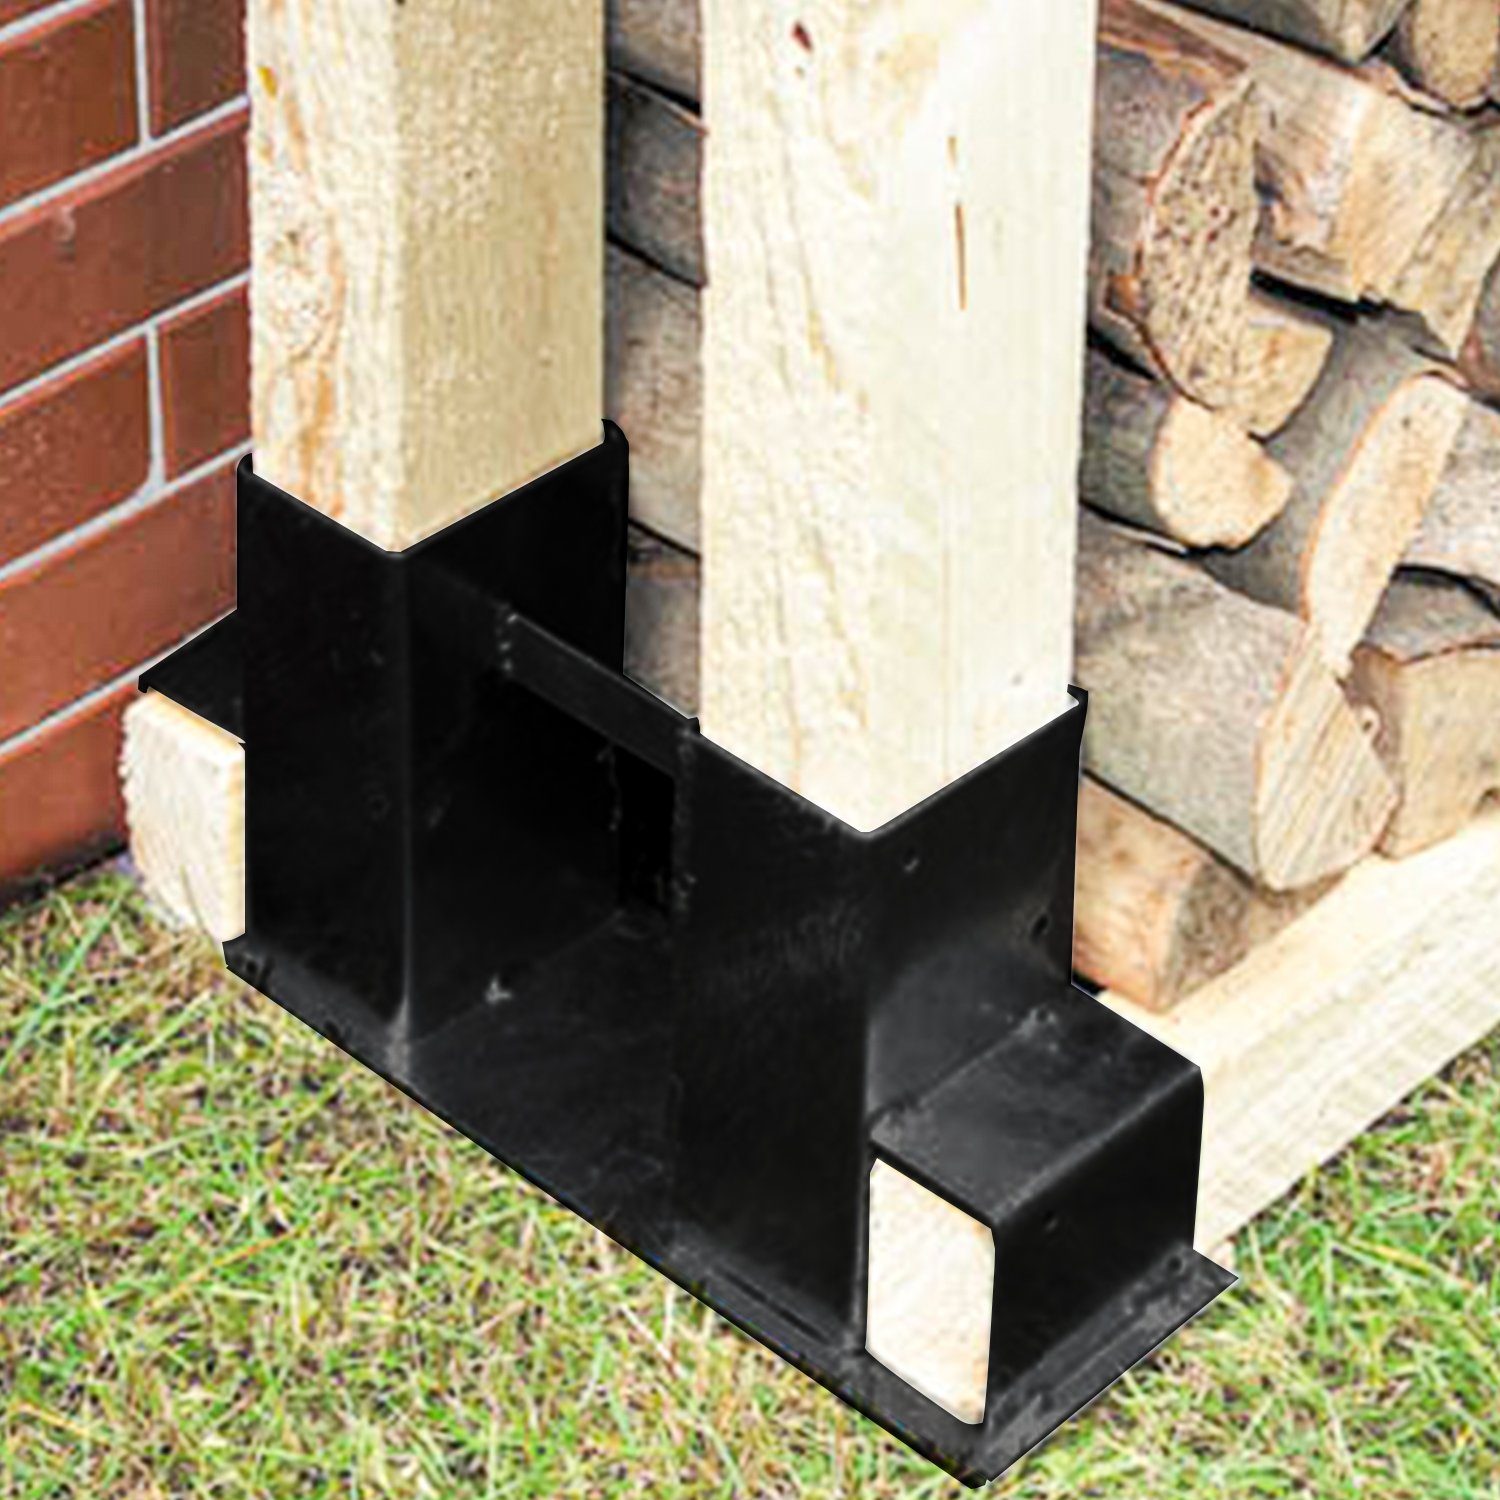 4x Metall Stapelhilfe Brennholz Gimisgu Brennholz Holzstapelhilfe Verzinkt für Stapelregal